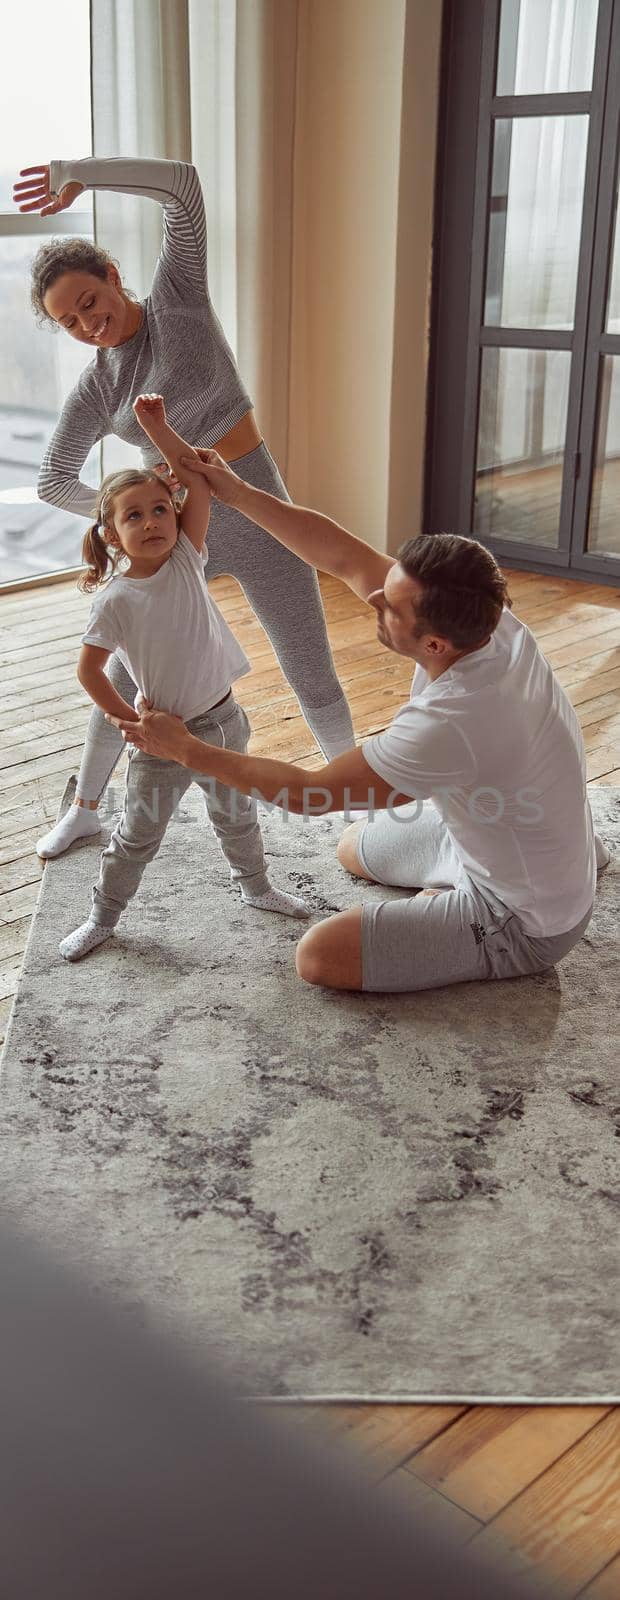 Jolly sporty family doing gymnastics together indoors by Yaroslav_astakhov